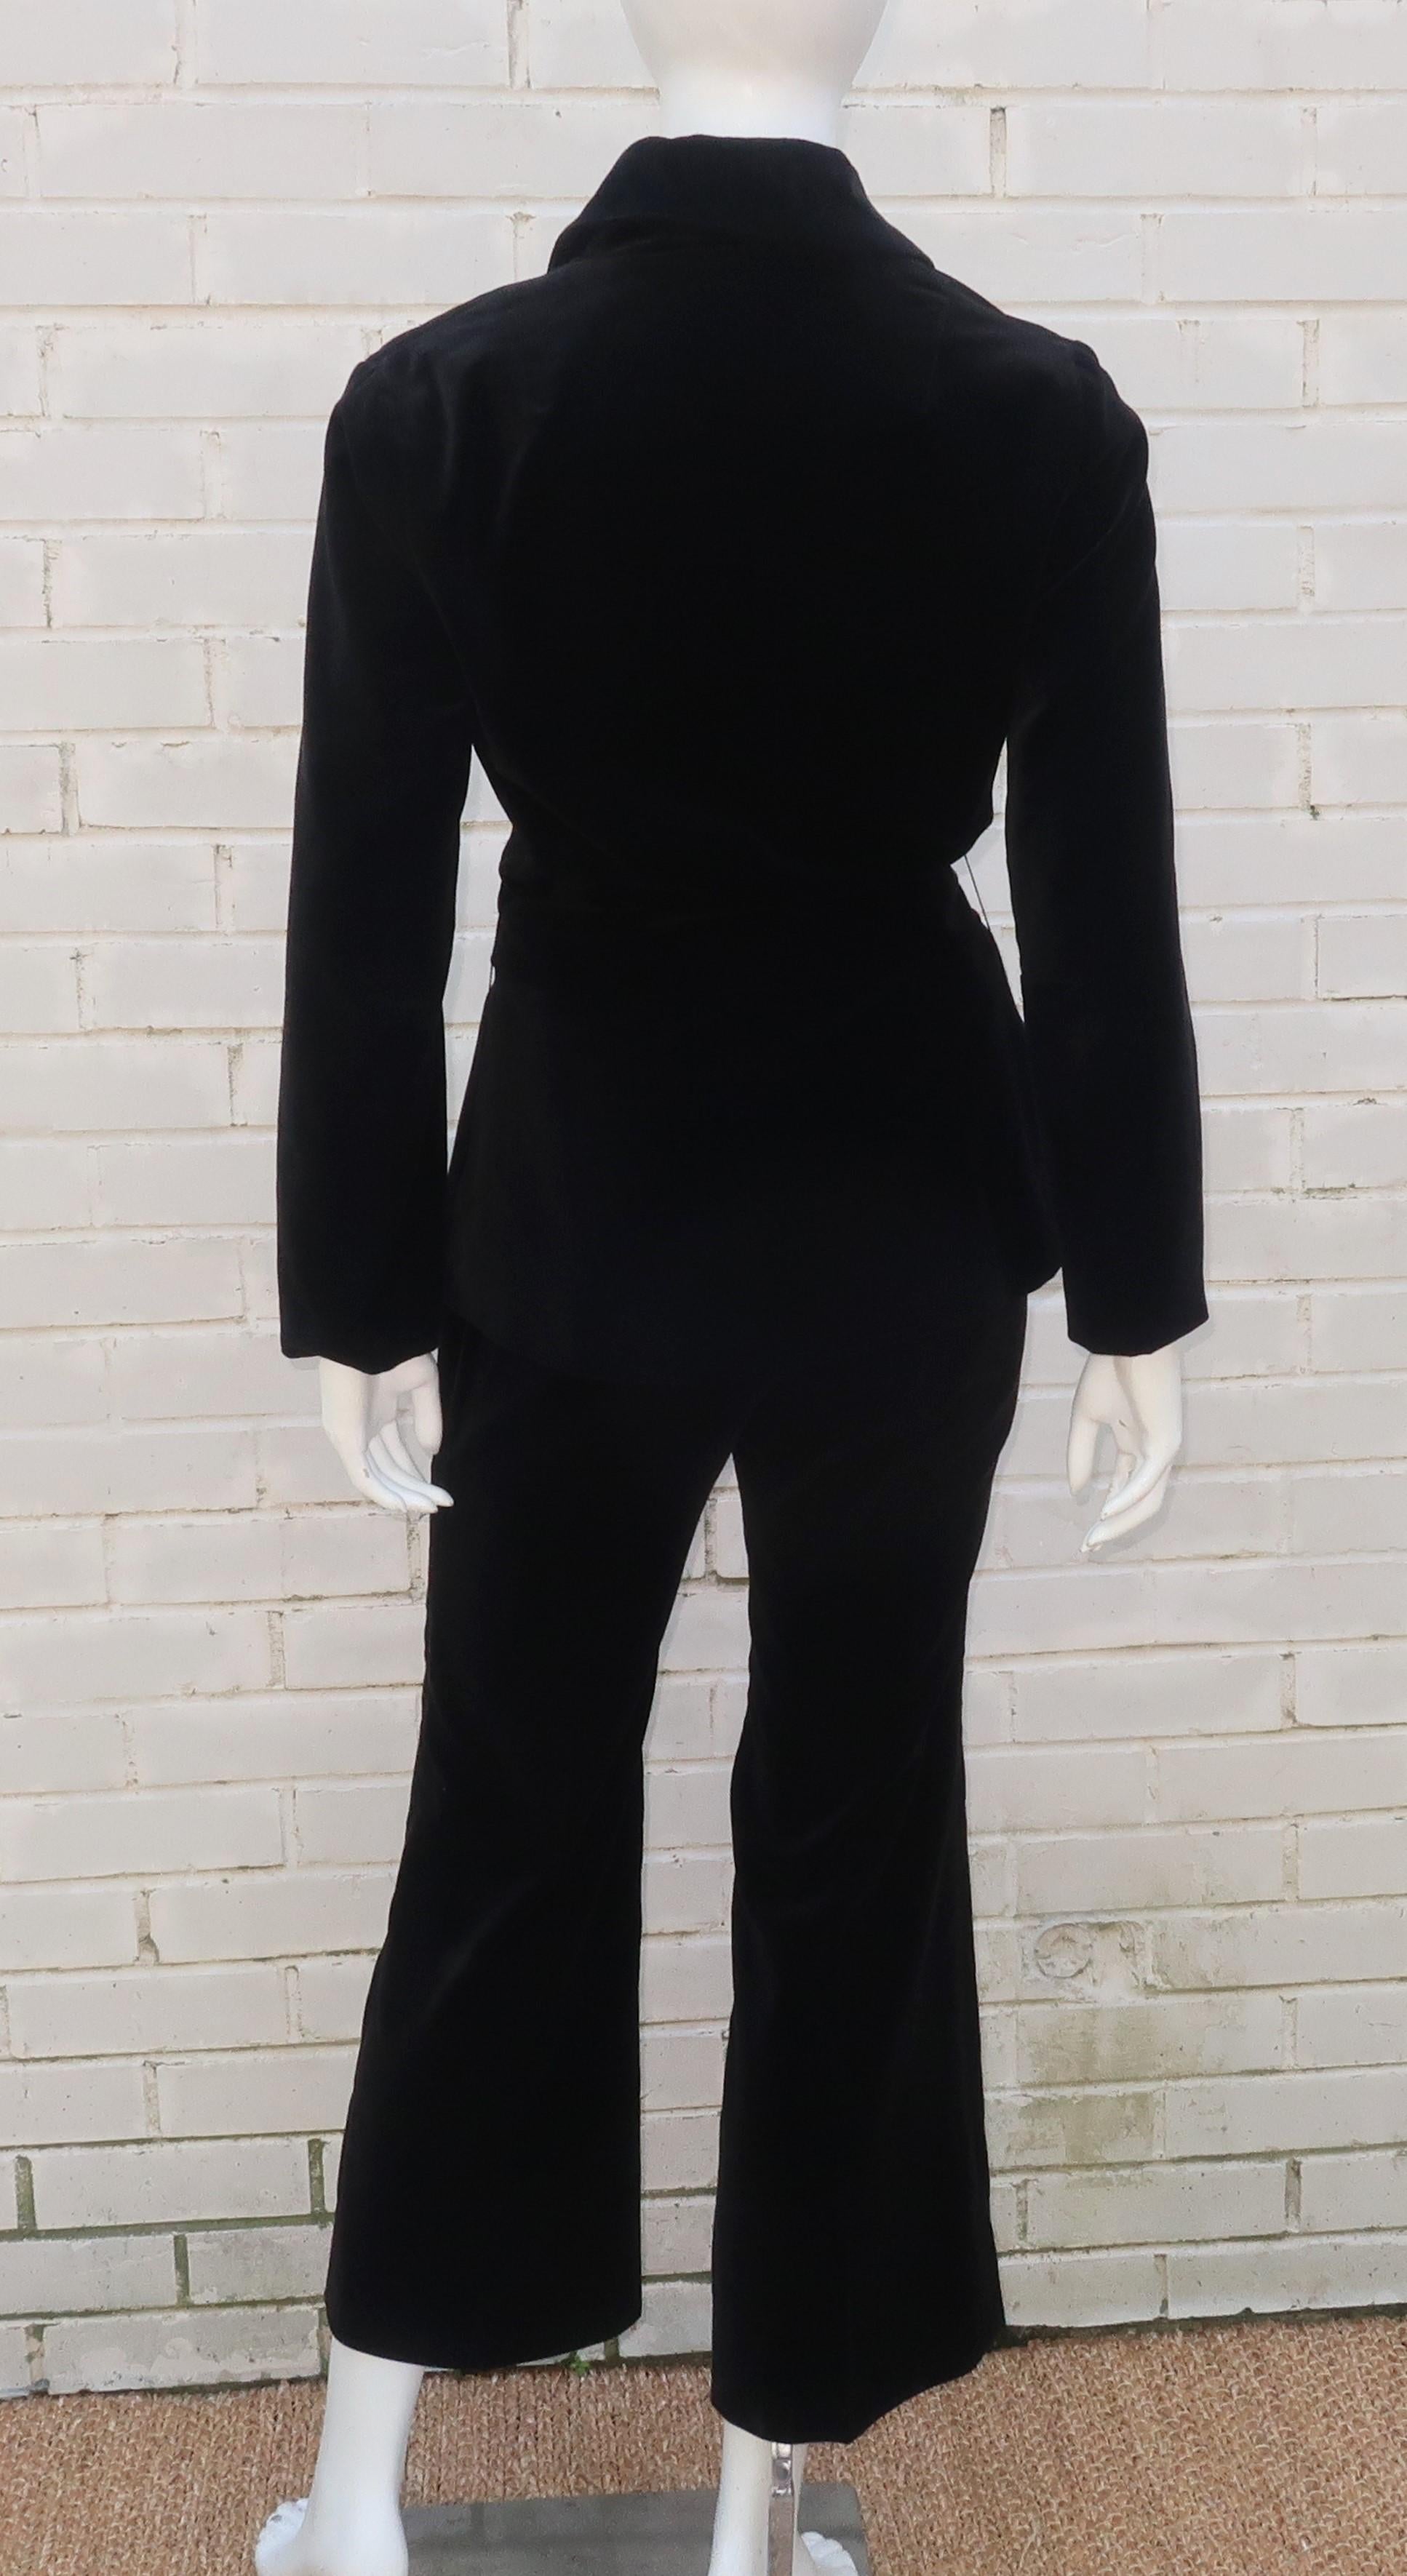 Black Velvet Pant Suit With Rhinestone Belt, C.1970 For Sale 4